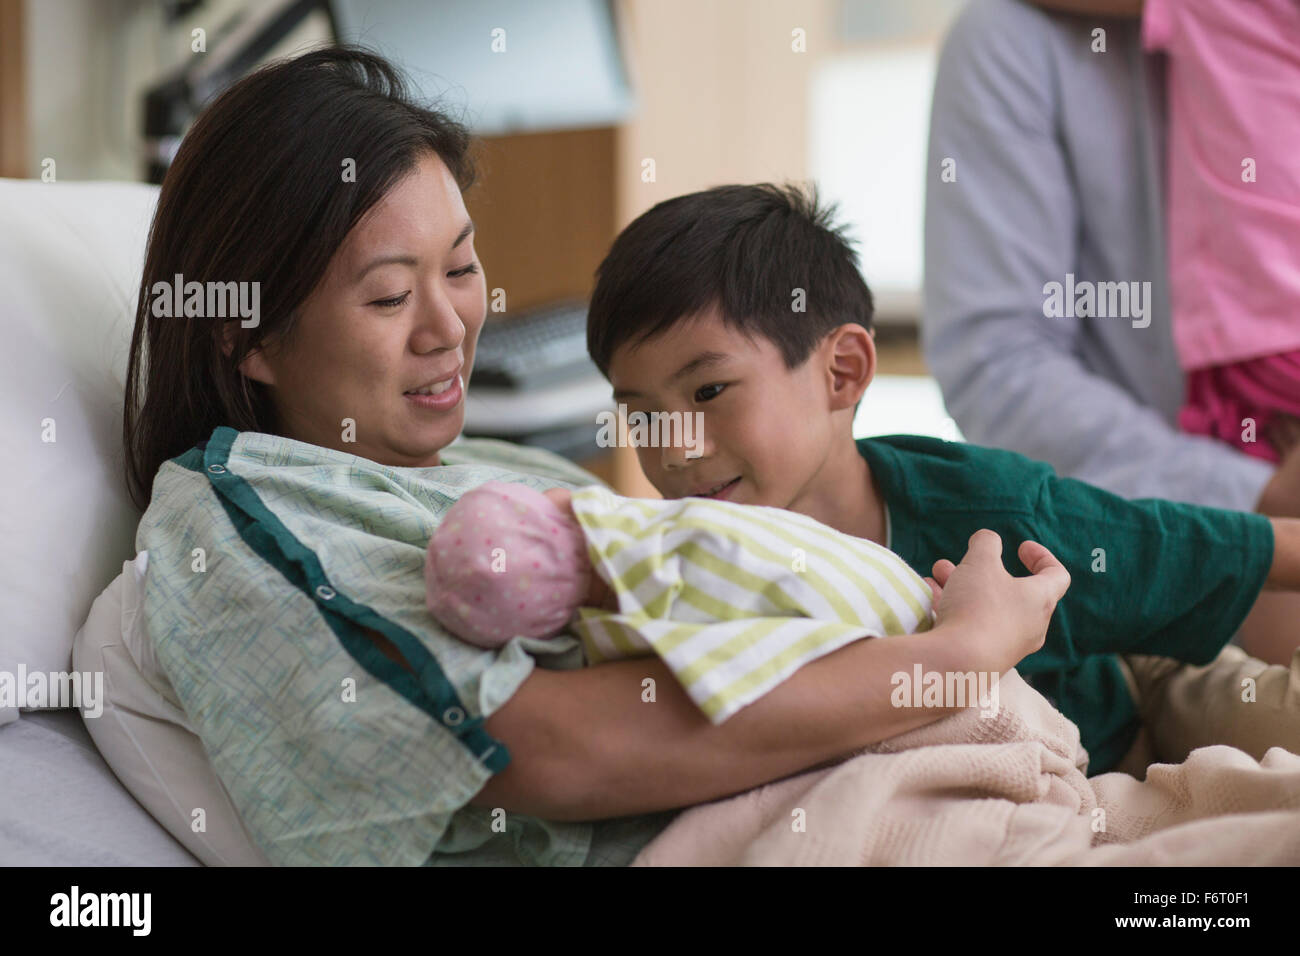 Family admiring newborn baby in hospital room Stock Photo